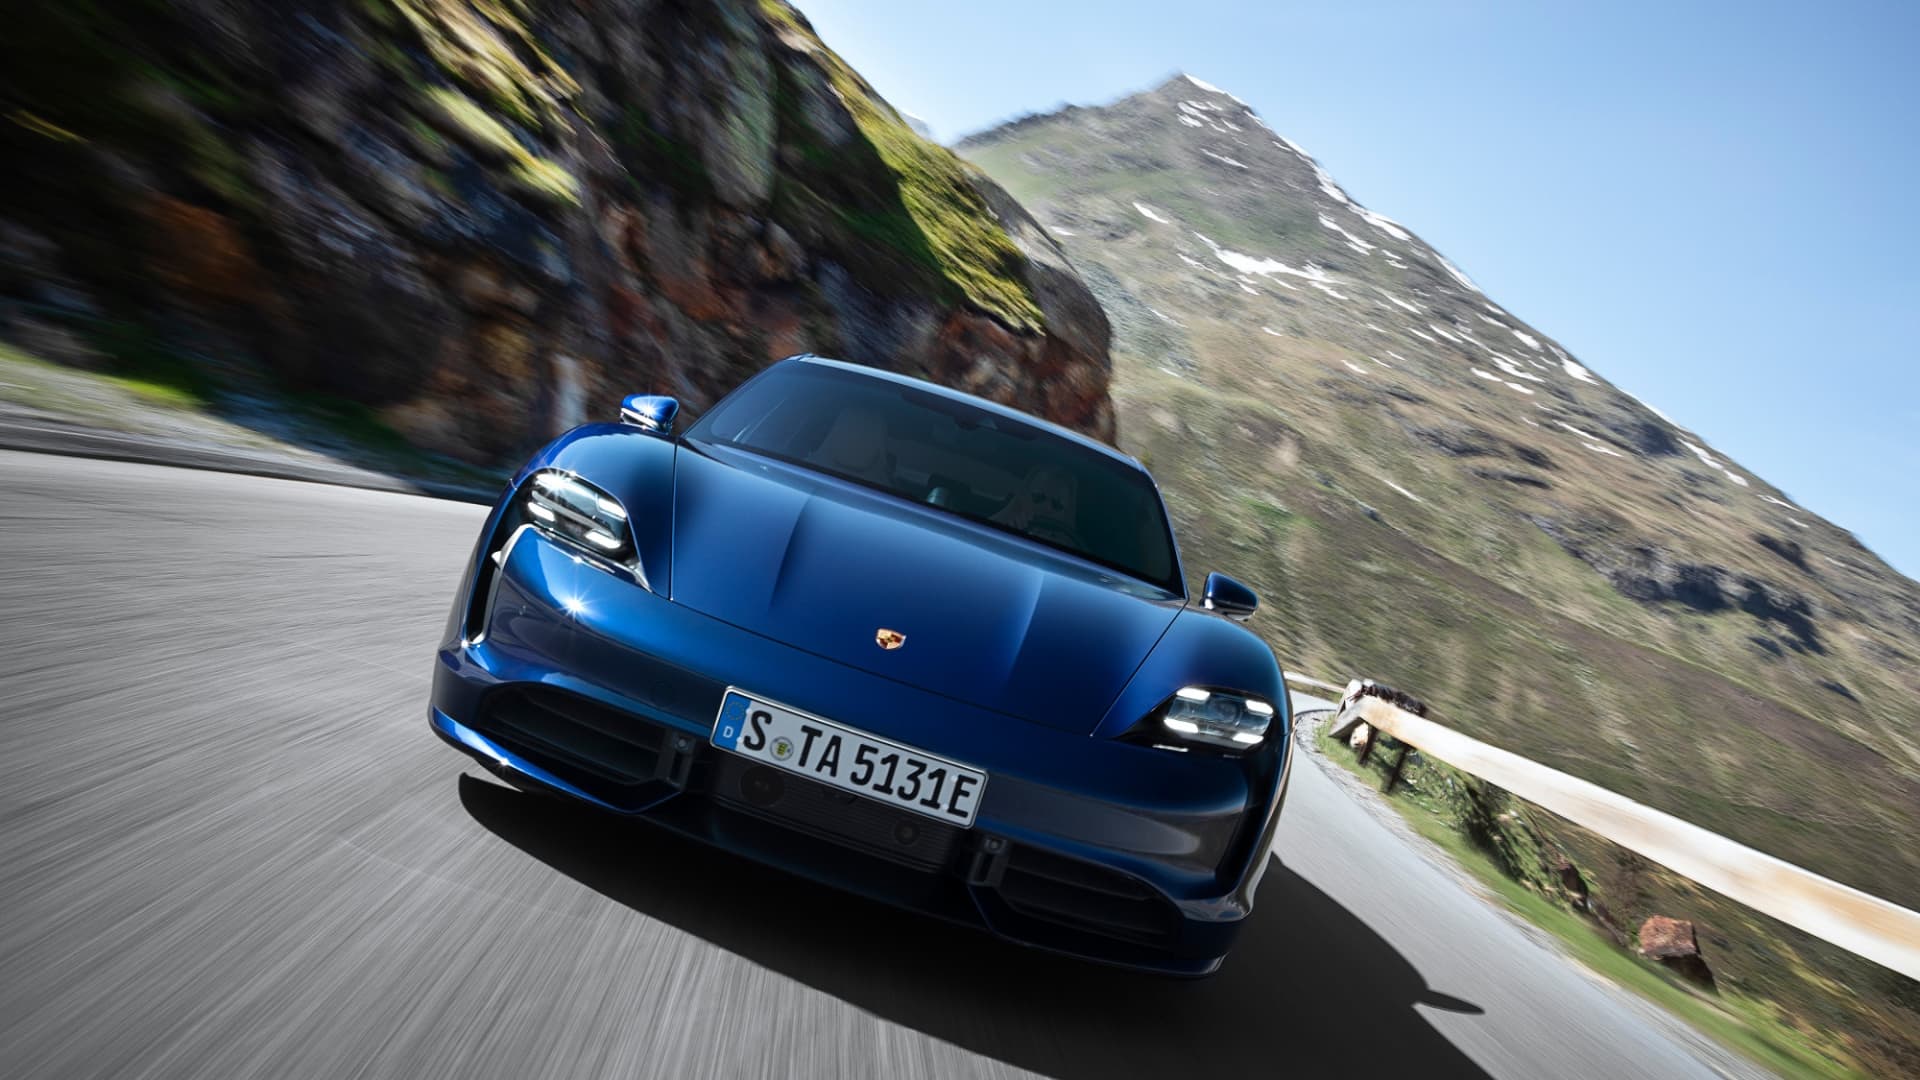 Porsche increases EV targets confirms 911 hybrid sports car – CNBC